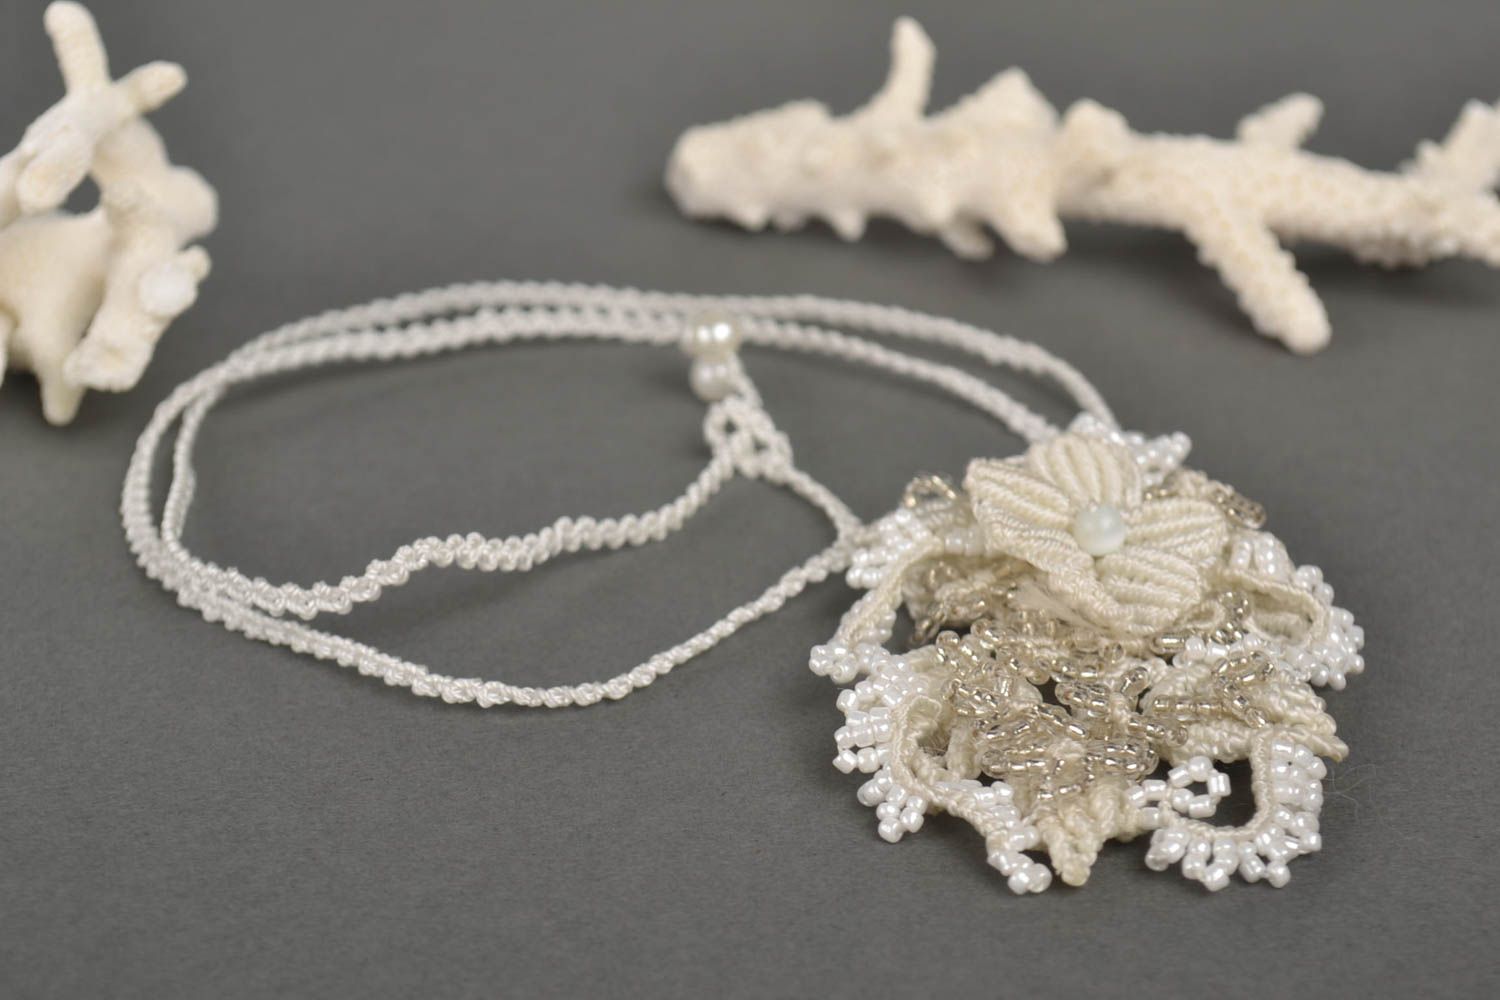 Handmade stylish jewelry unusual pendant made of beads textile pendant photo 1